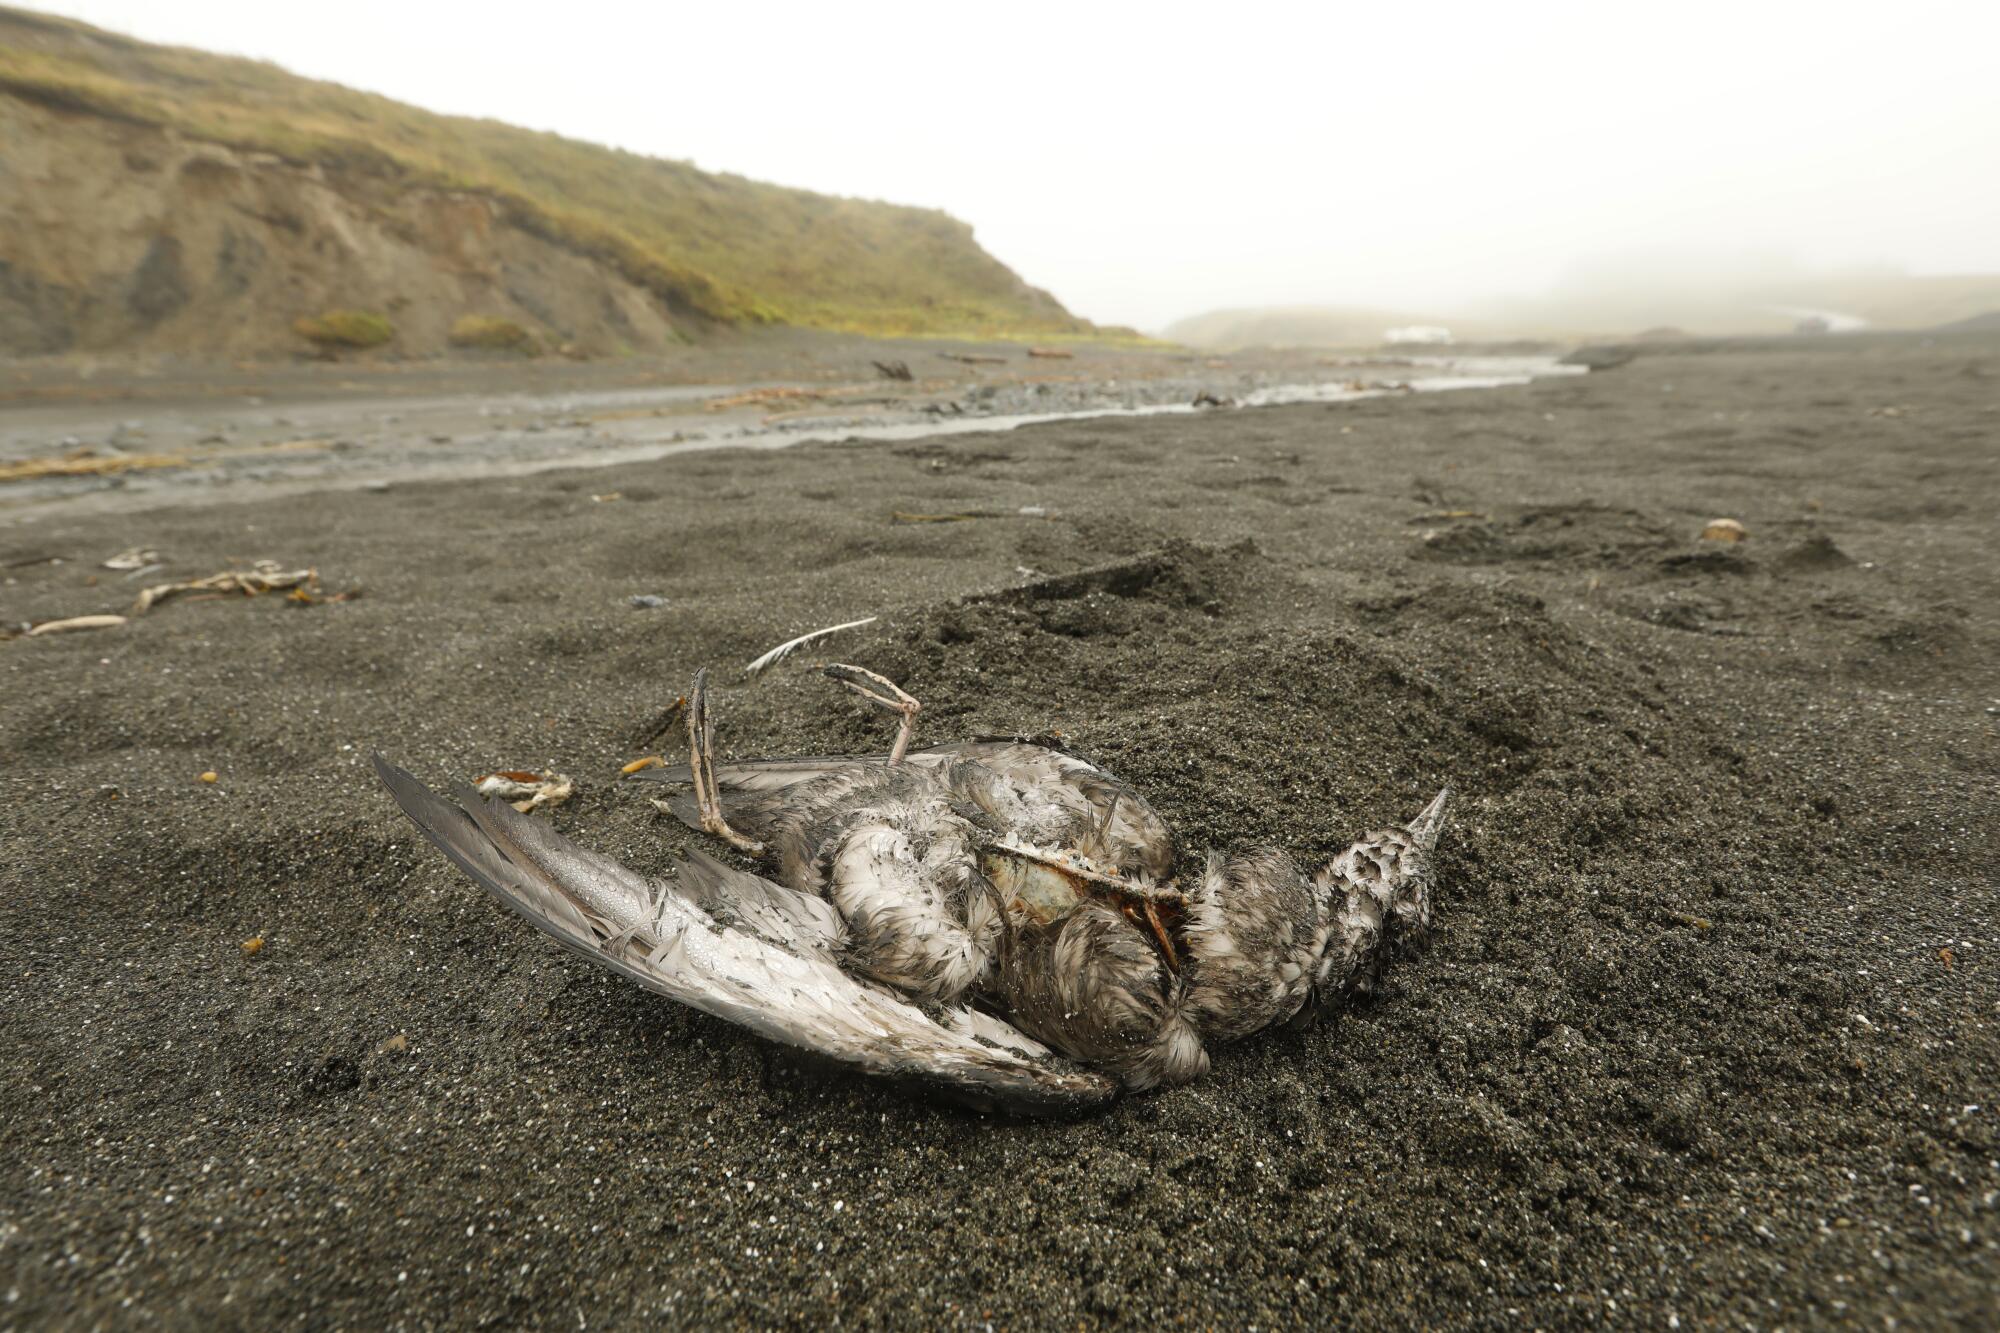 A dead bird in the sand.